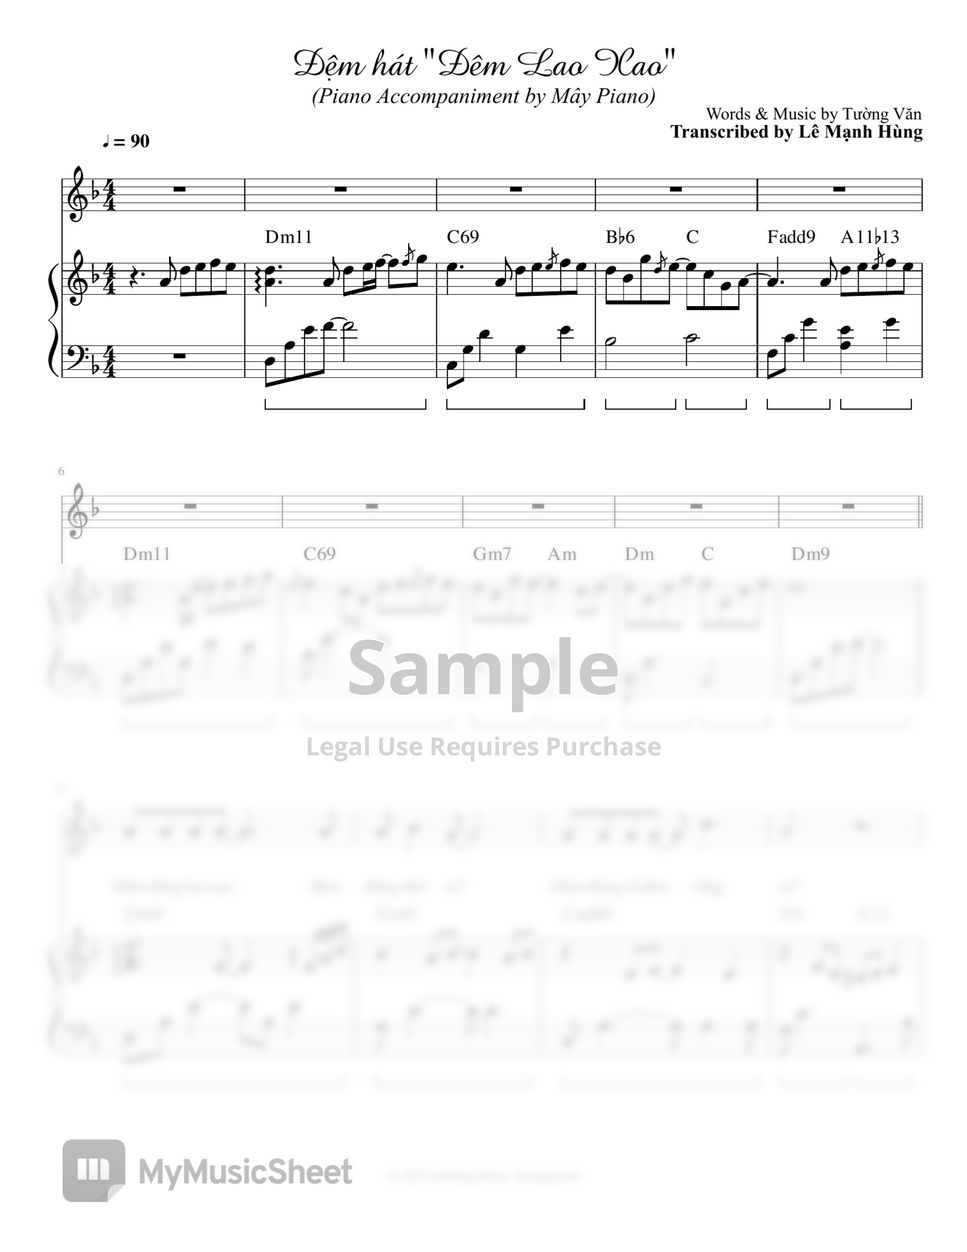 Cover by Mây Piano - Đệm hát Đêm Lao Xao (Transcribed) by Le Manh Hung